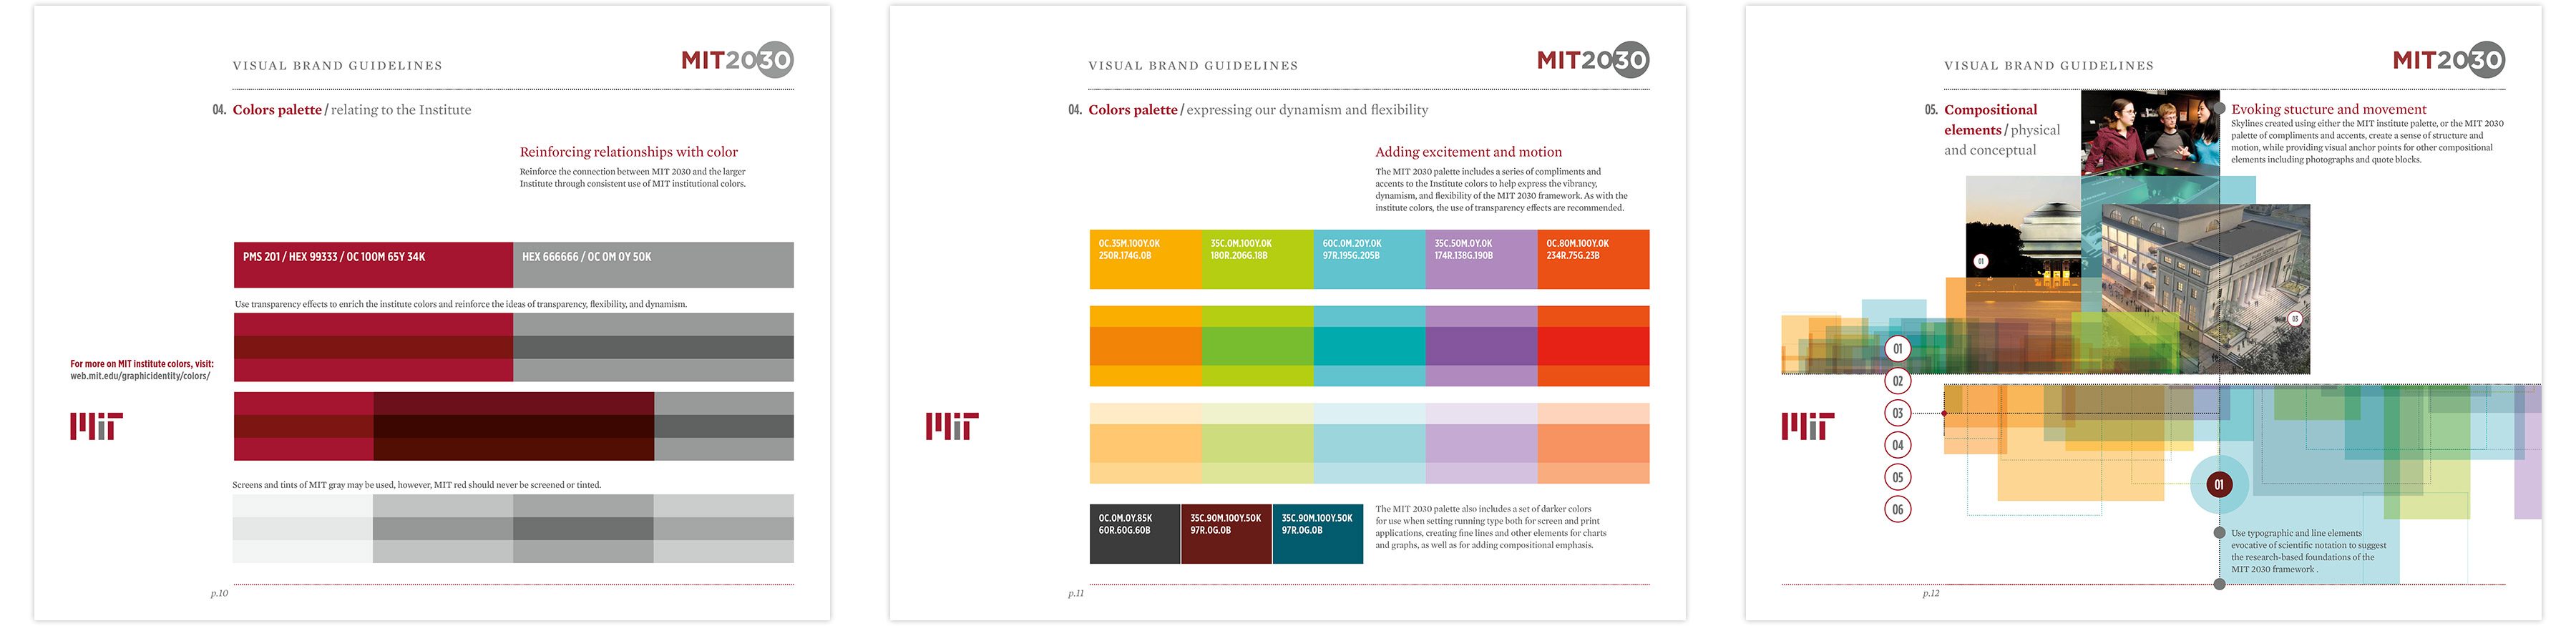 MIT 2030 brand book spread